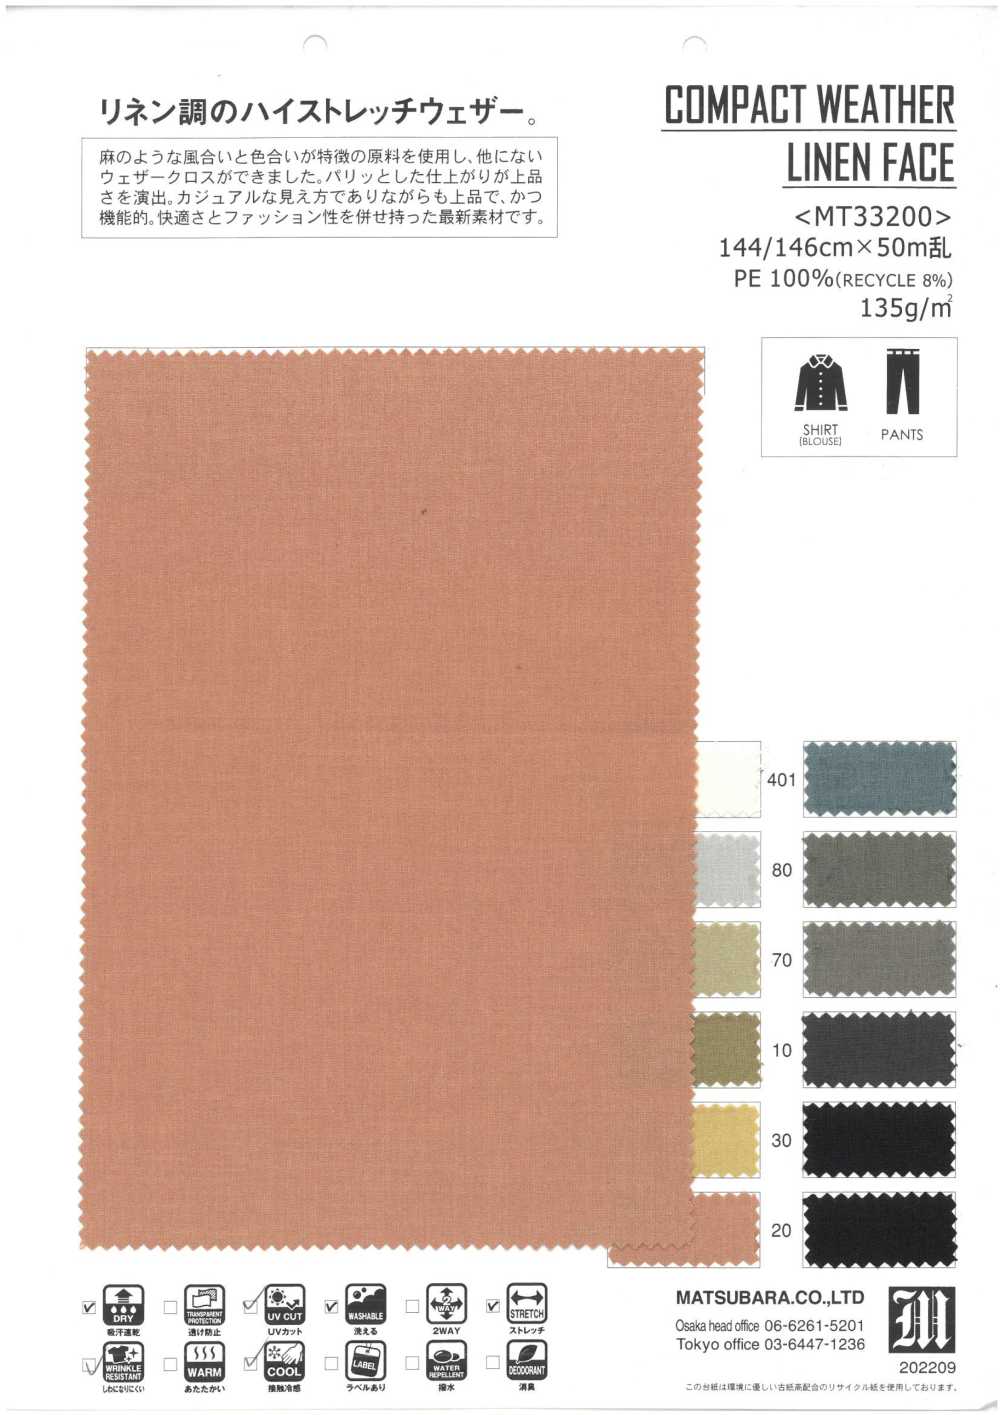 MT33200 COMPACT WEATHER LINEN FACE[Textile / Fabric] Matsubara